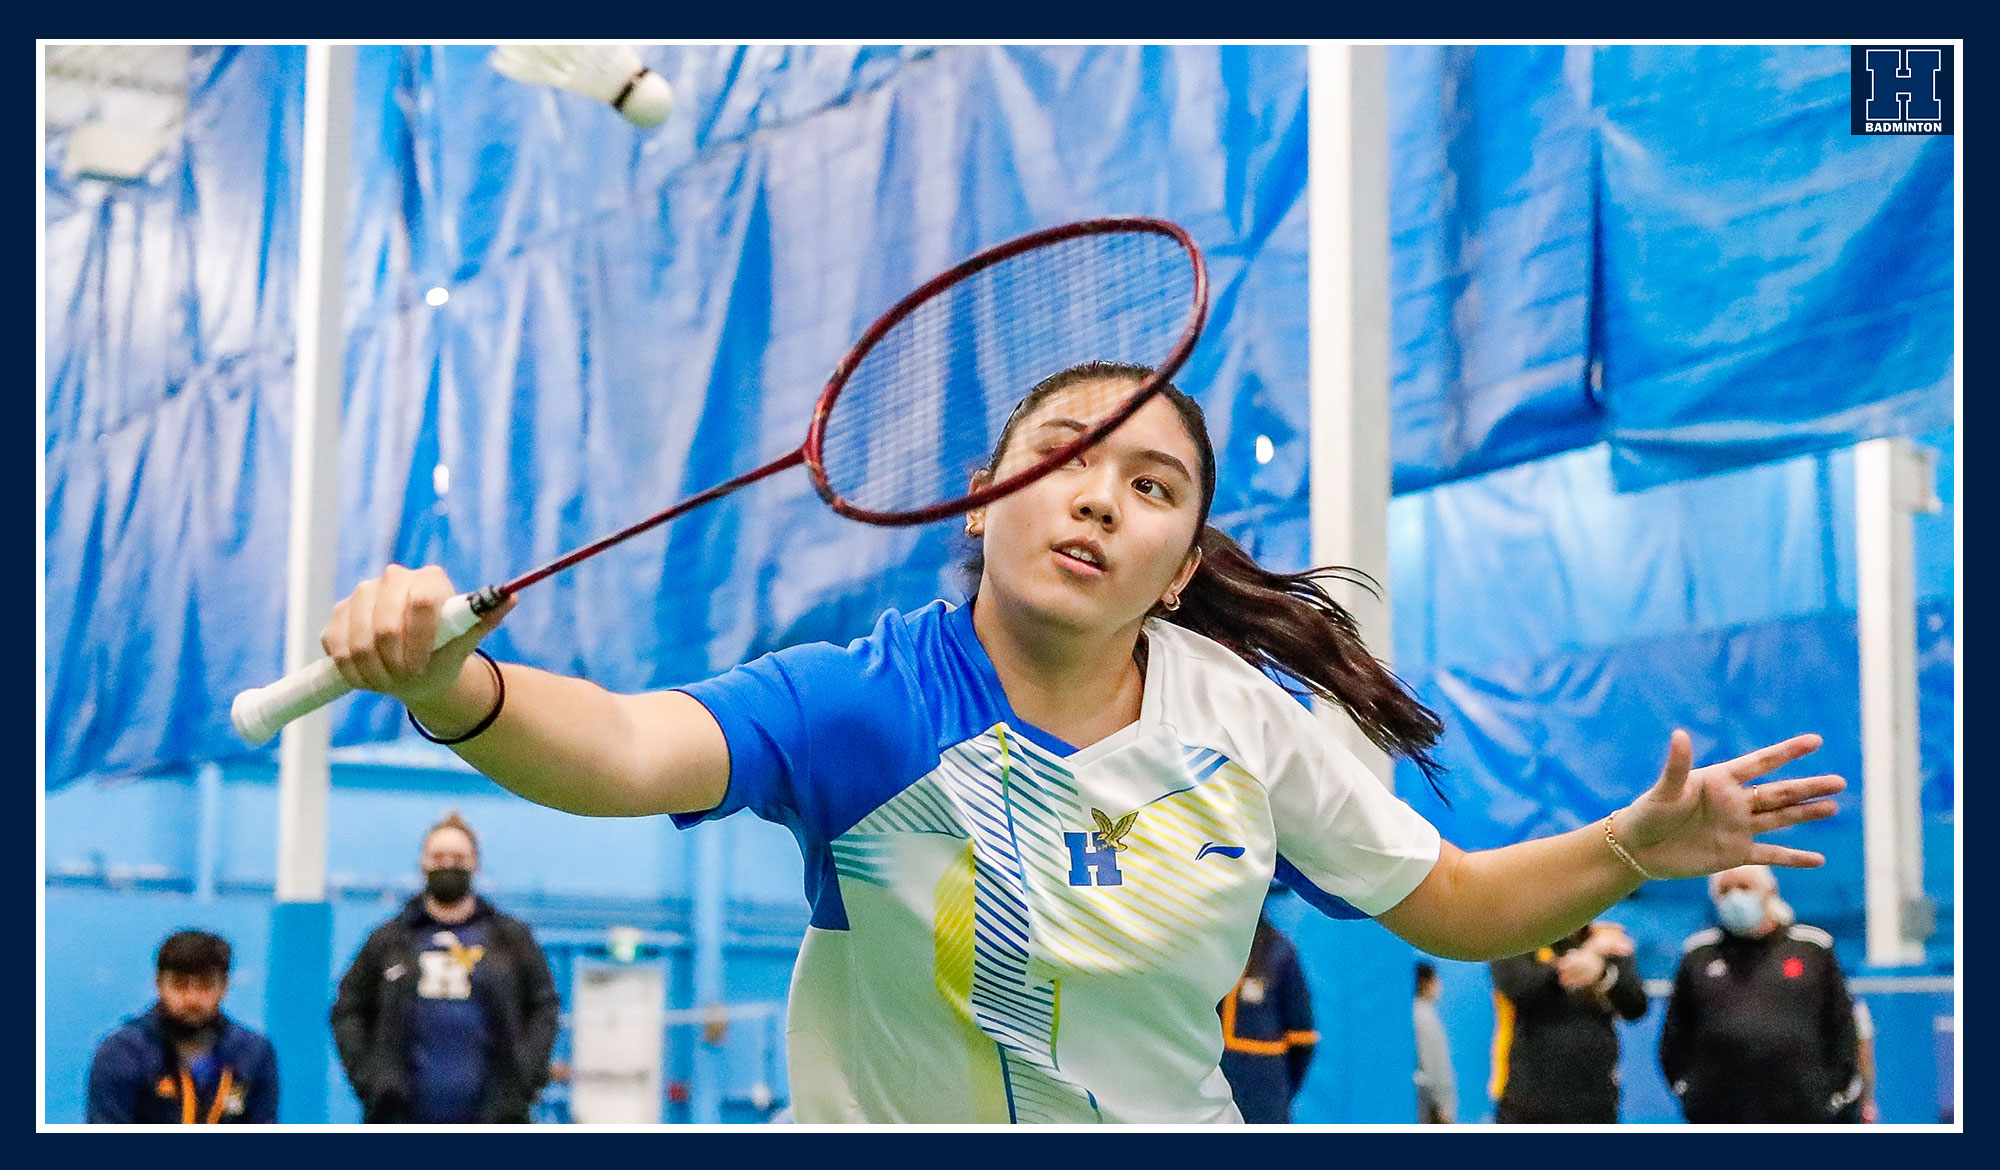 Airi returning a serve in badminton